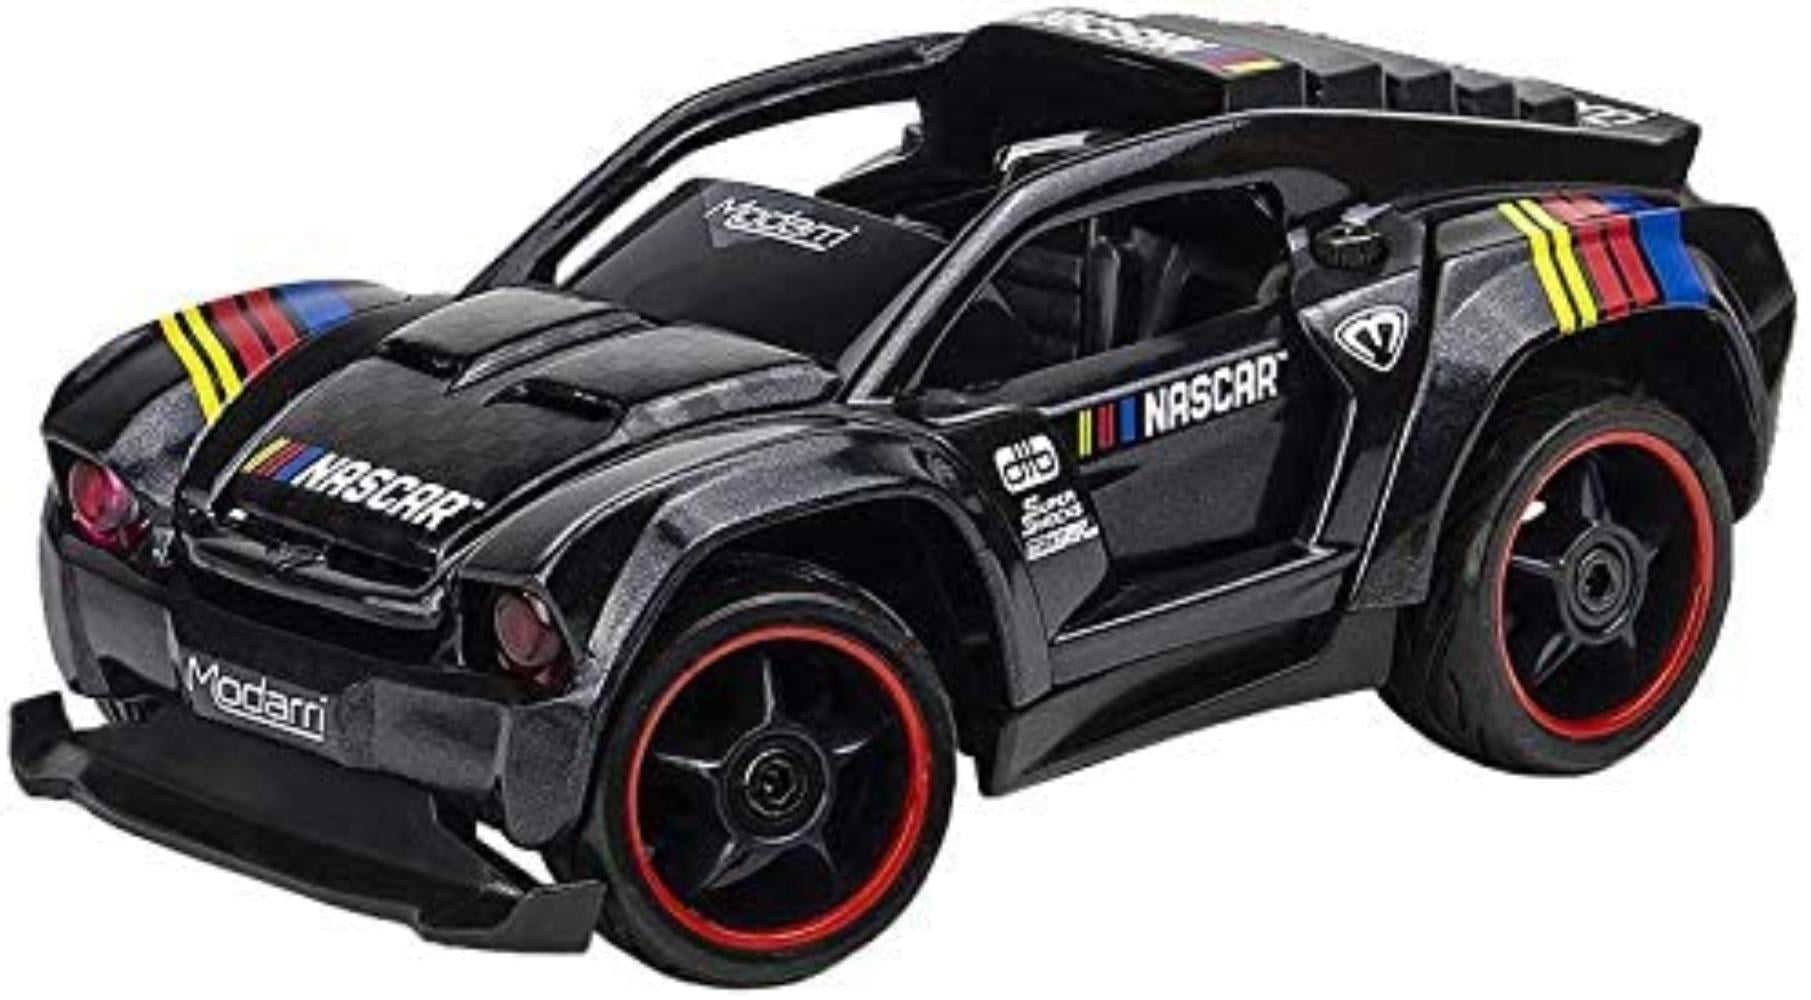 Modarri NASCAR Toy Car Speedway Trackset Bundle | Toy Race Car 